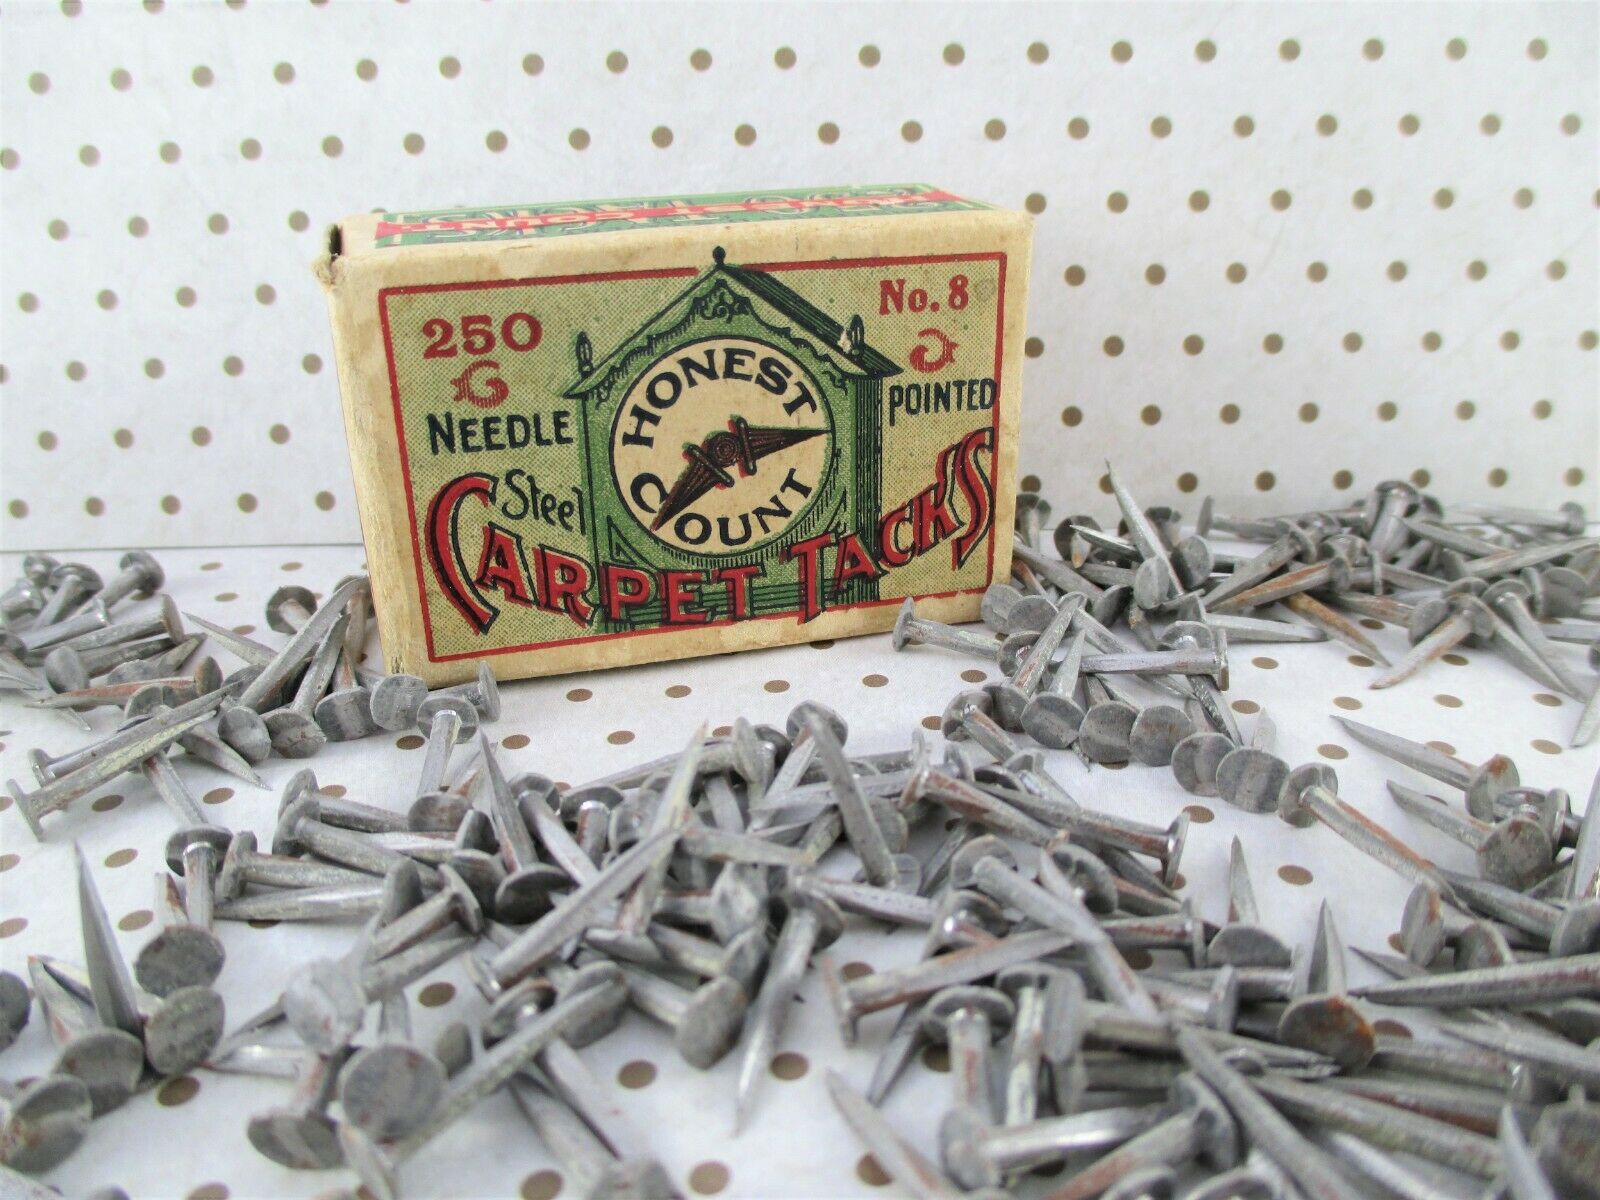 Vintage Box Of Honest Count Carpet Tacks